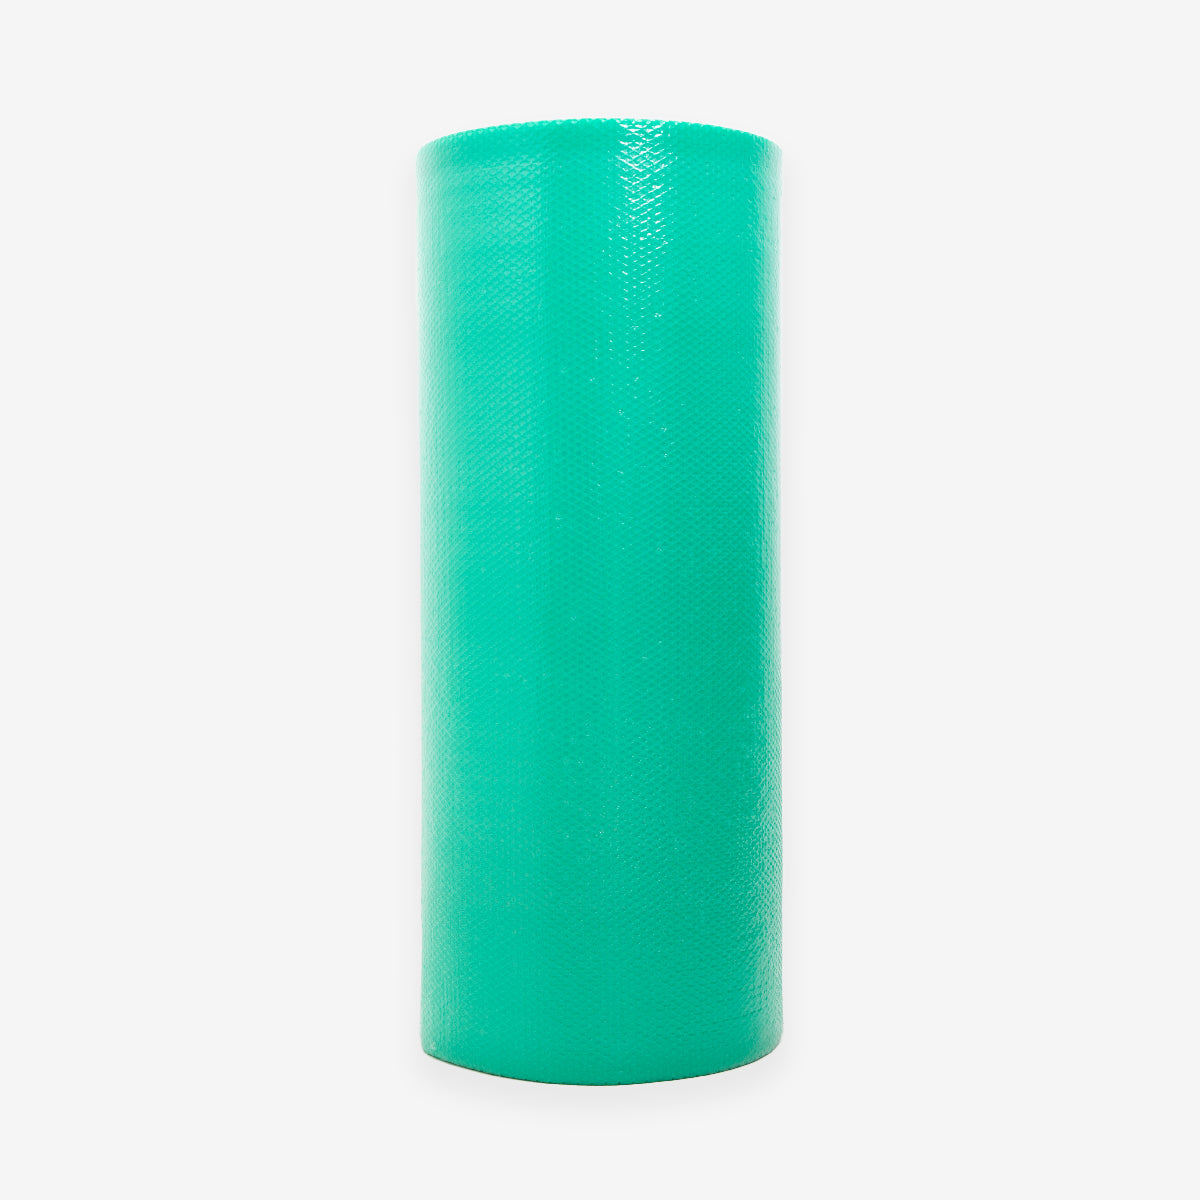 Pluriball/Bobina a bolle cm120 x 80m - 120g/mq polietilene verde PLSVE